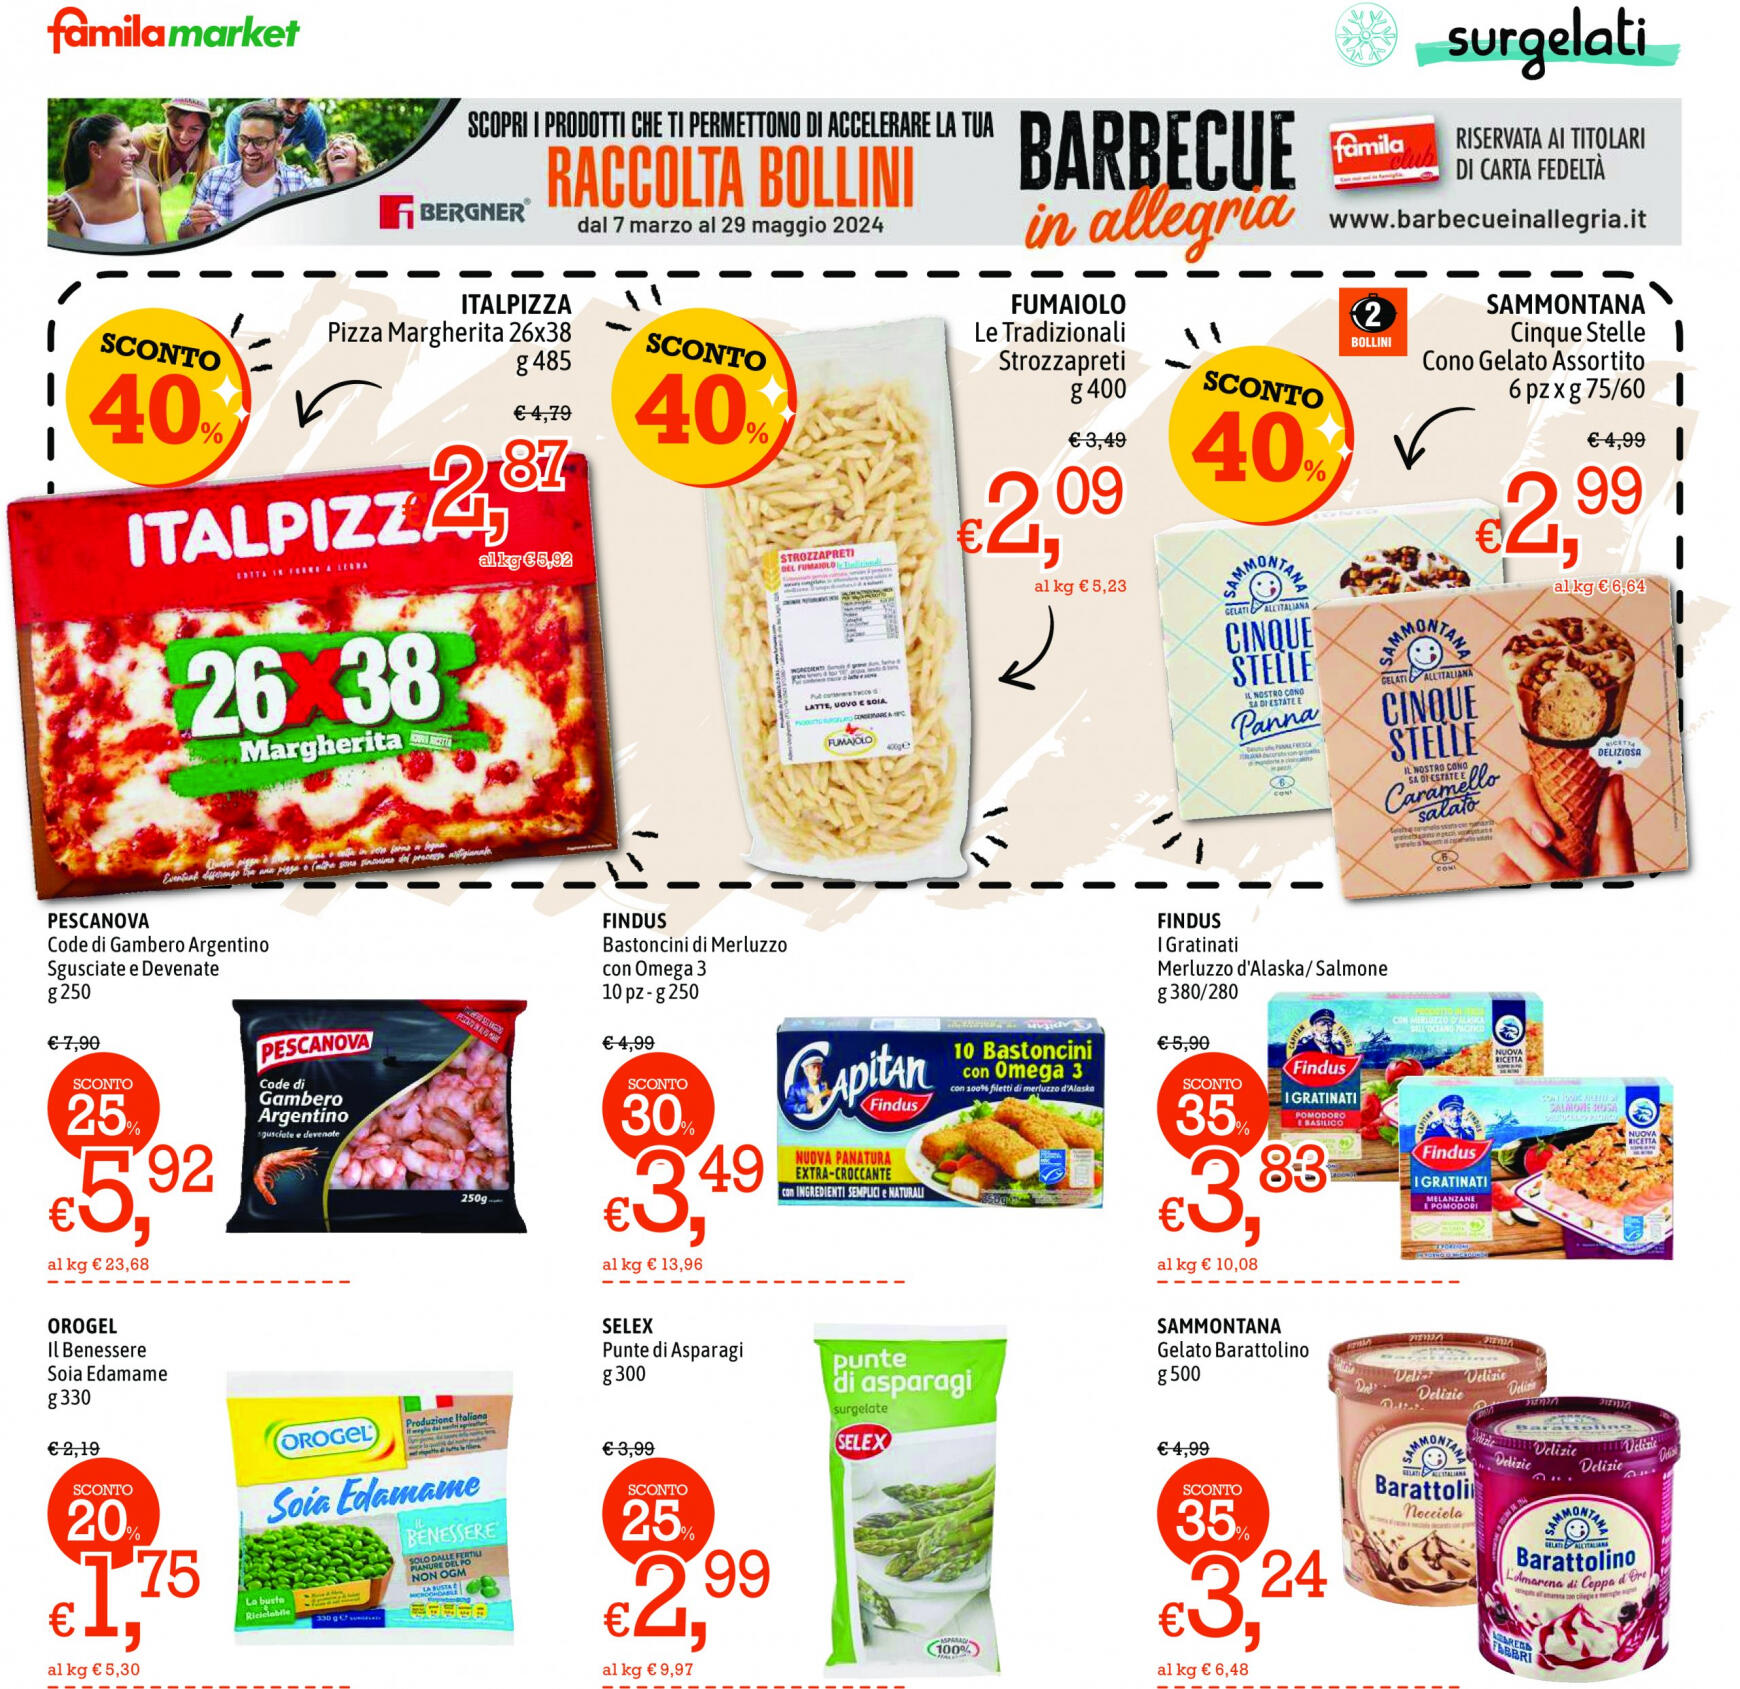 famila - Nuovo volantino Famila market 09.05. - 22.05. - page: 8